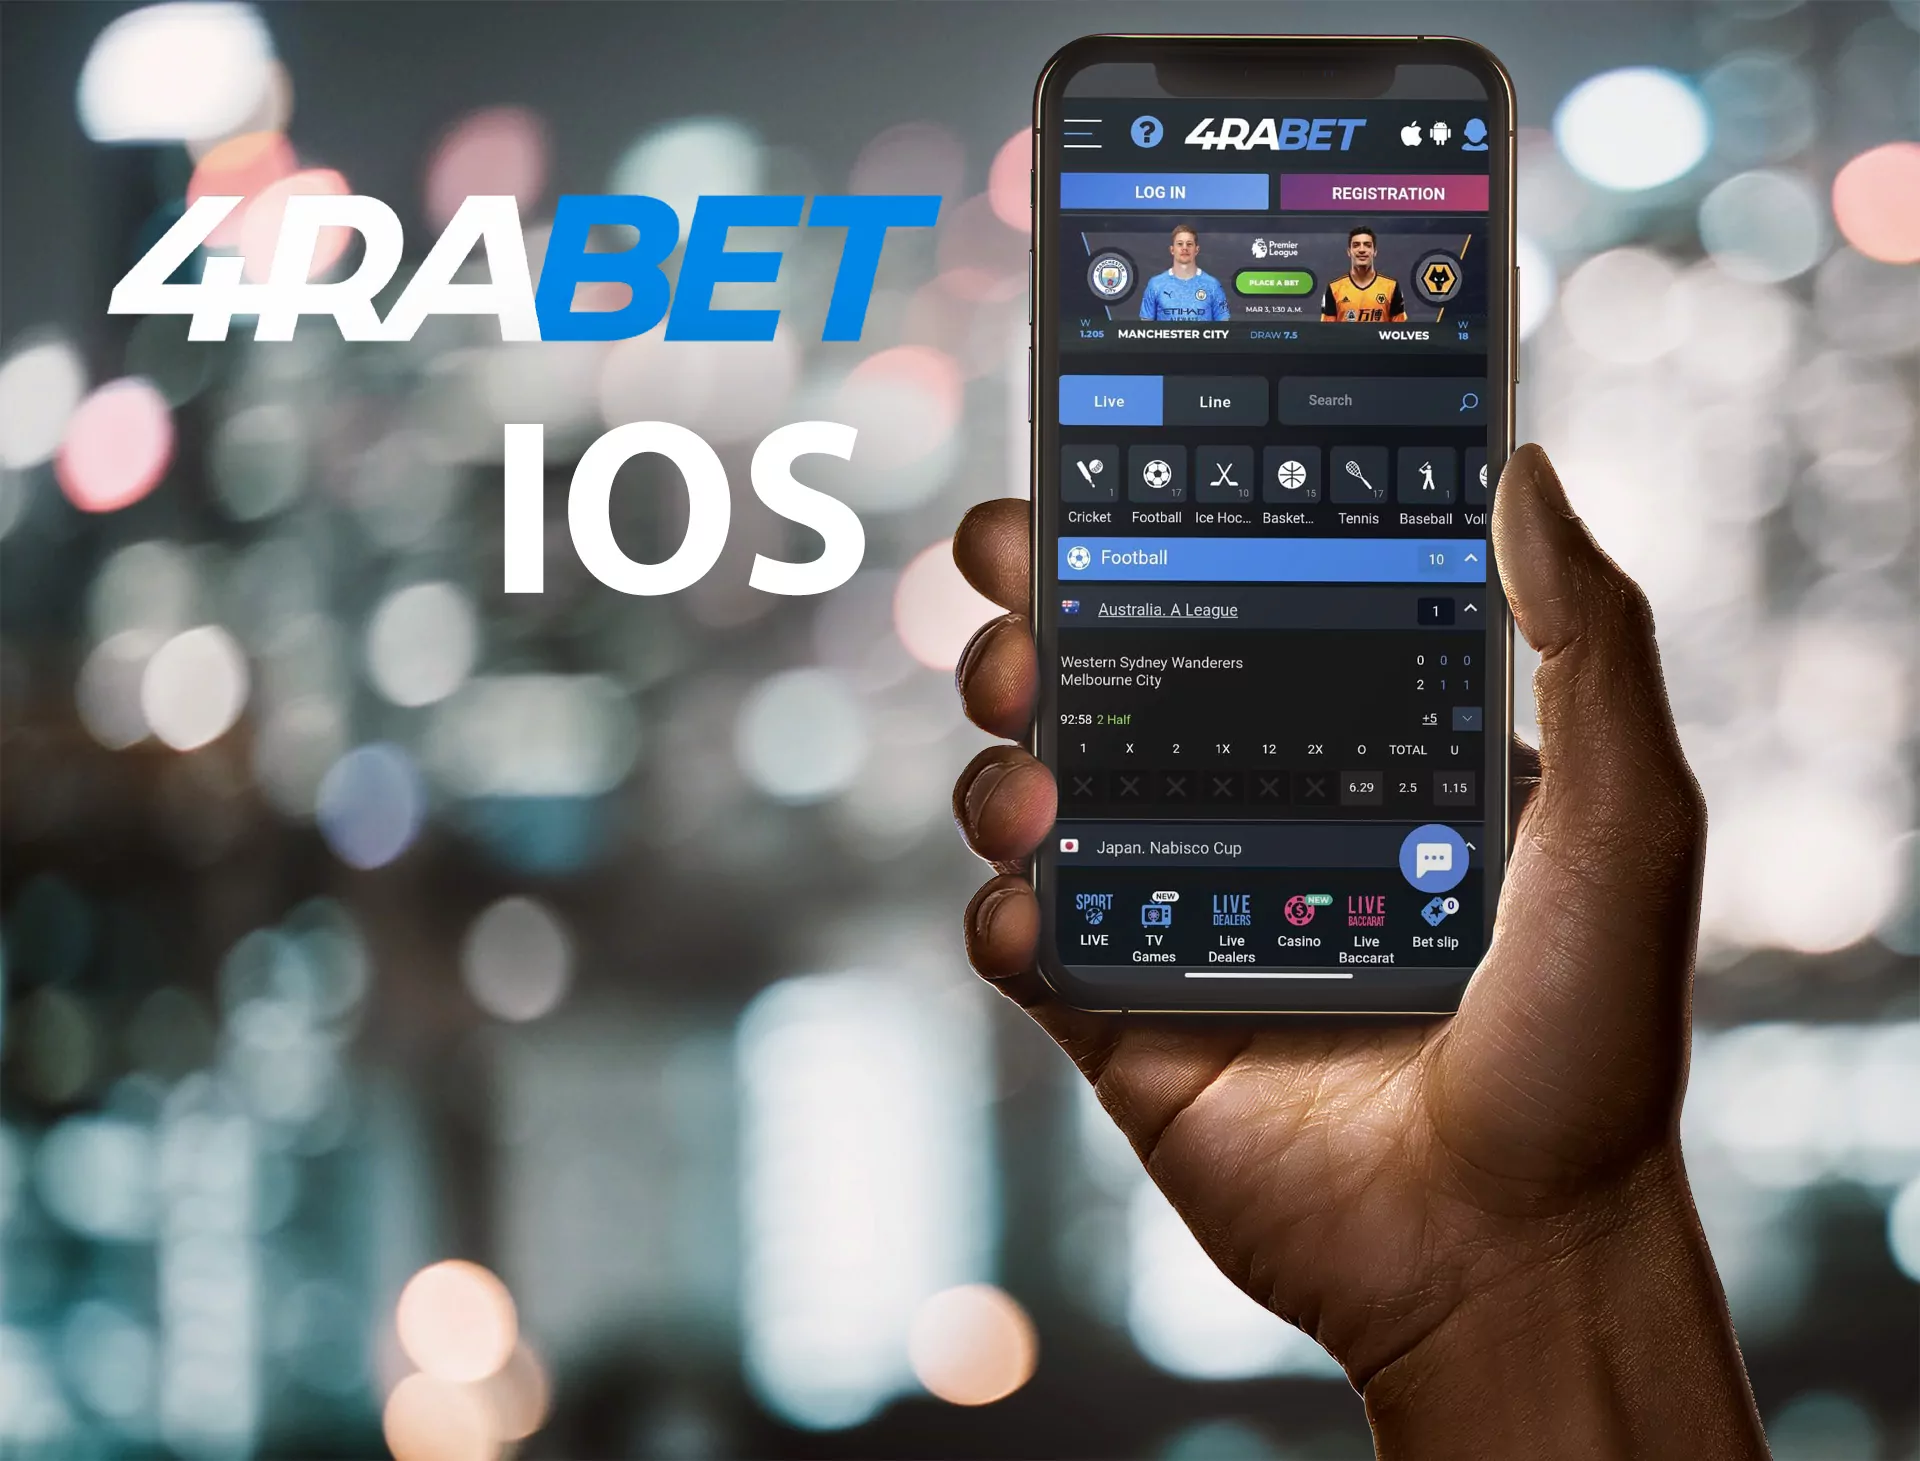 4rabet app for iPhone.